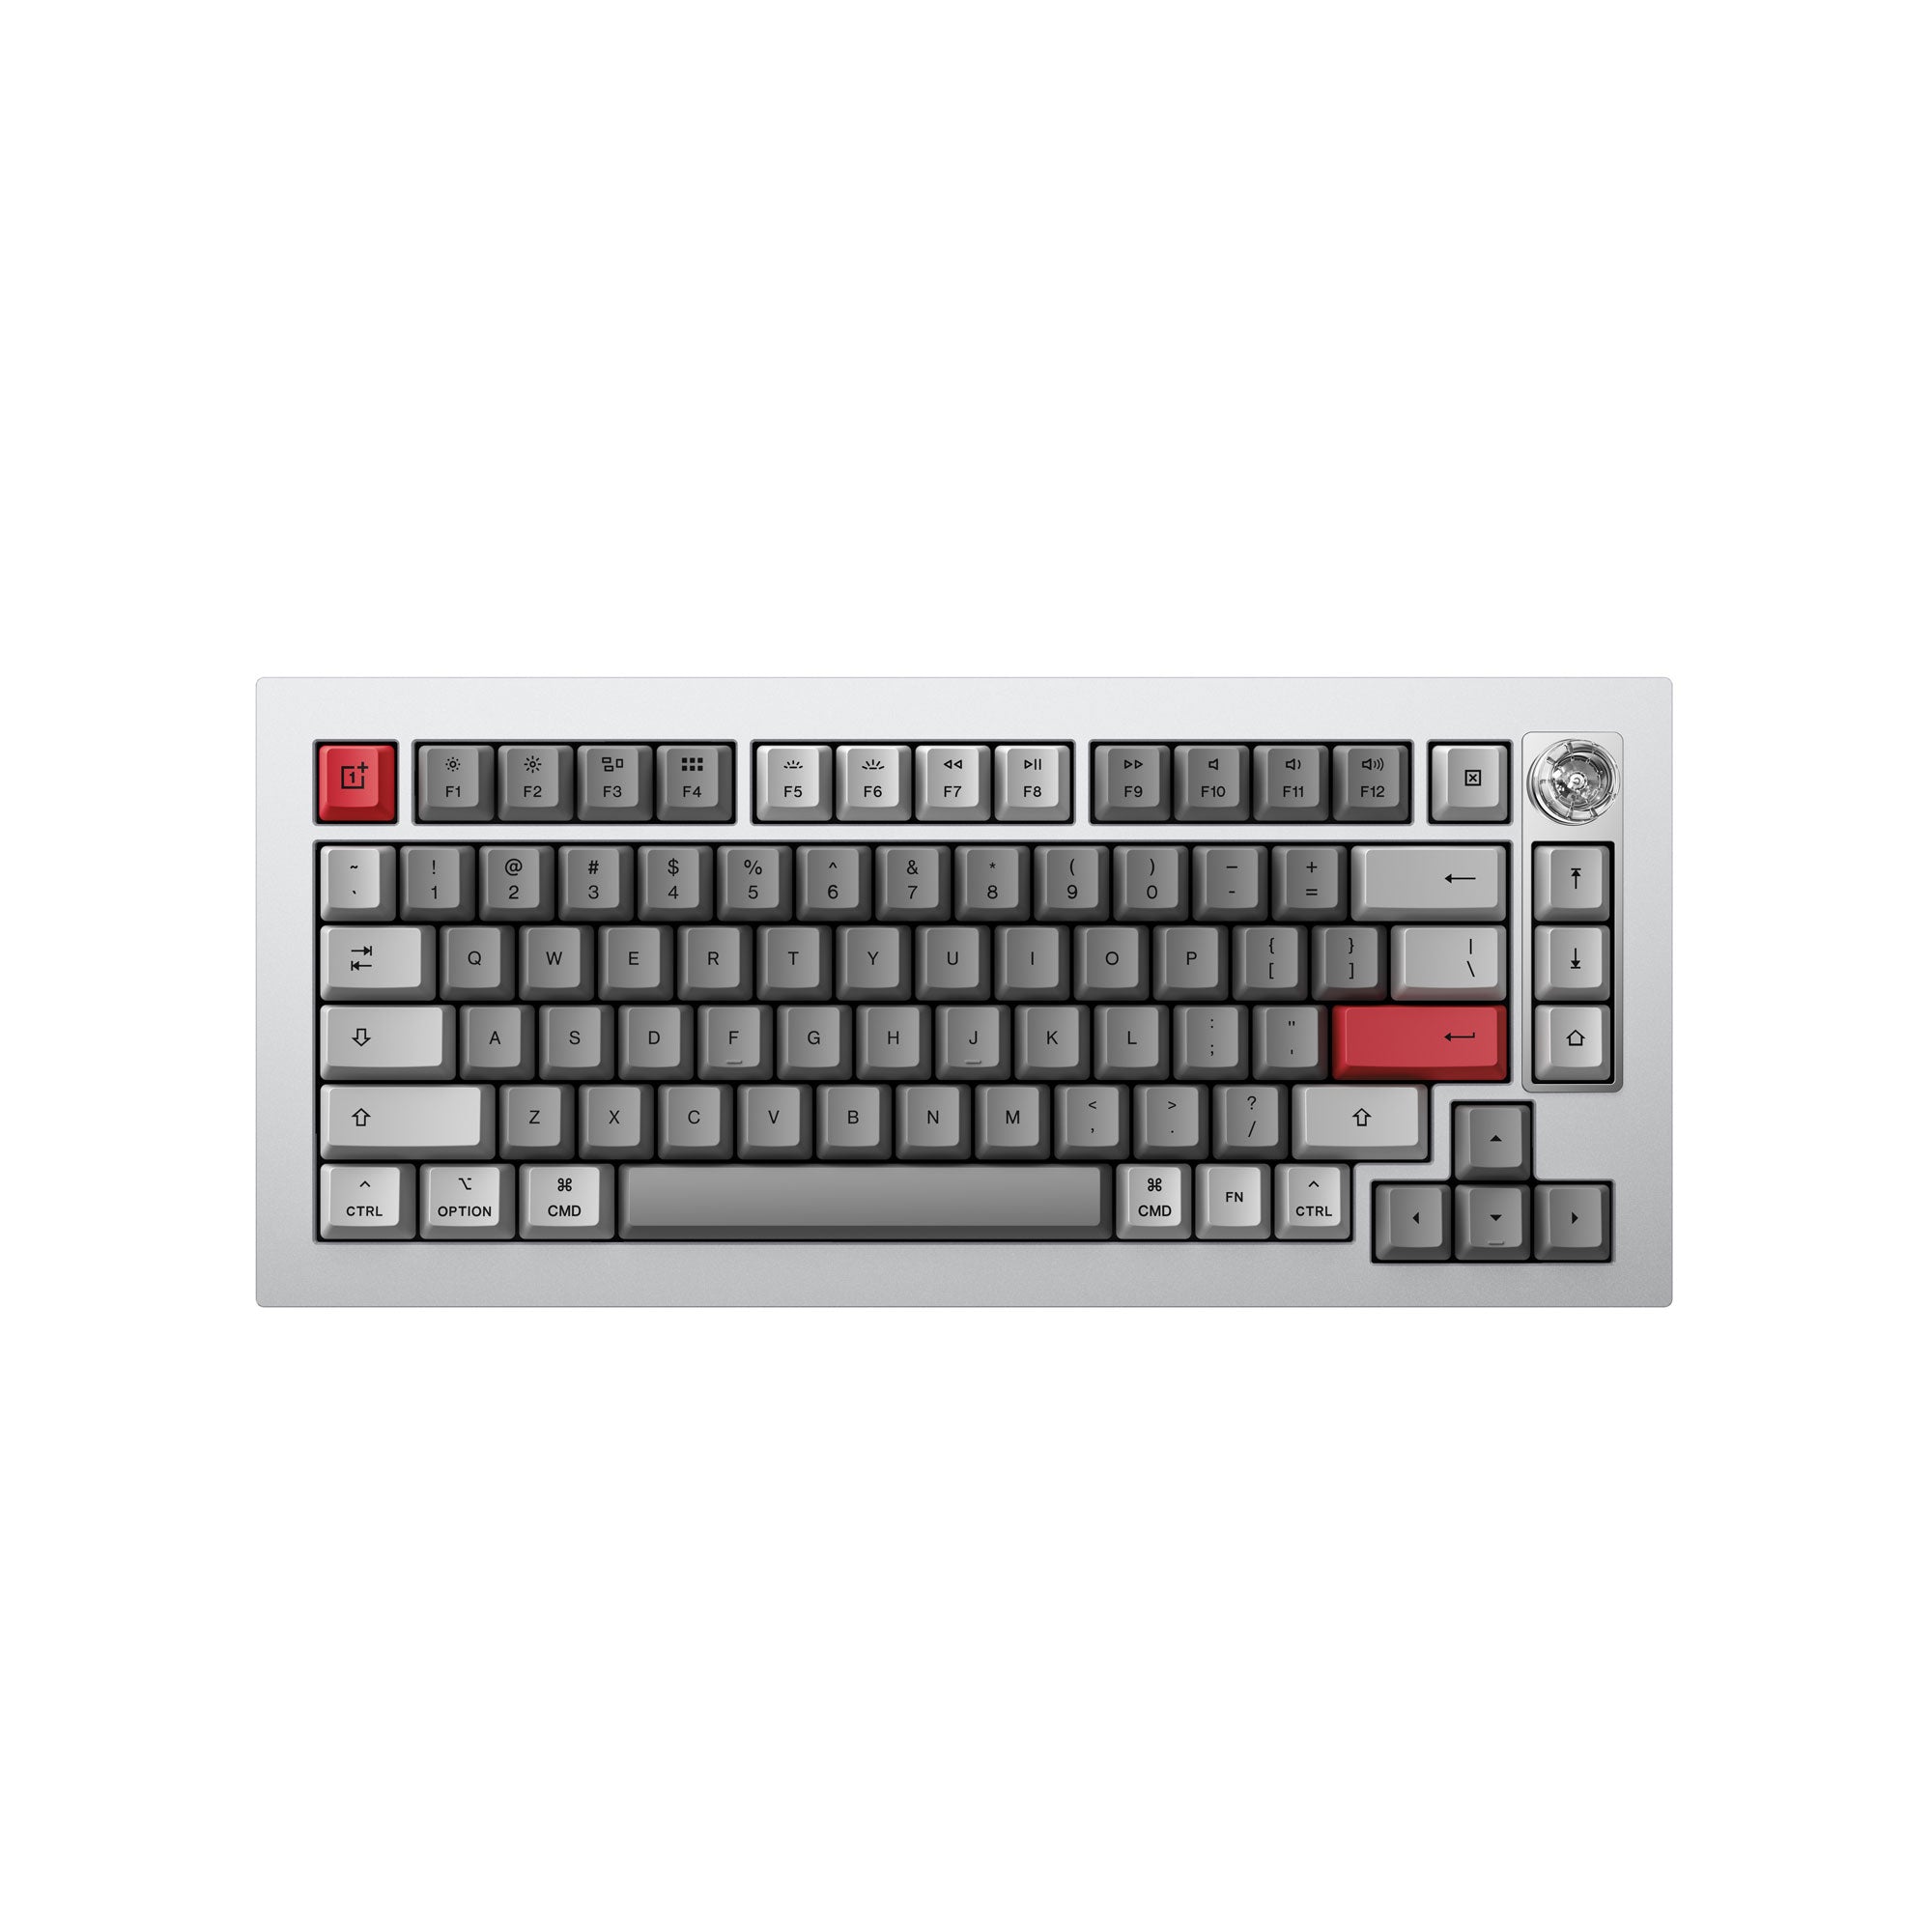 Keyboard 81 Pro QMK/VIA Wireless Custom Mechanical Keyboard